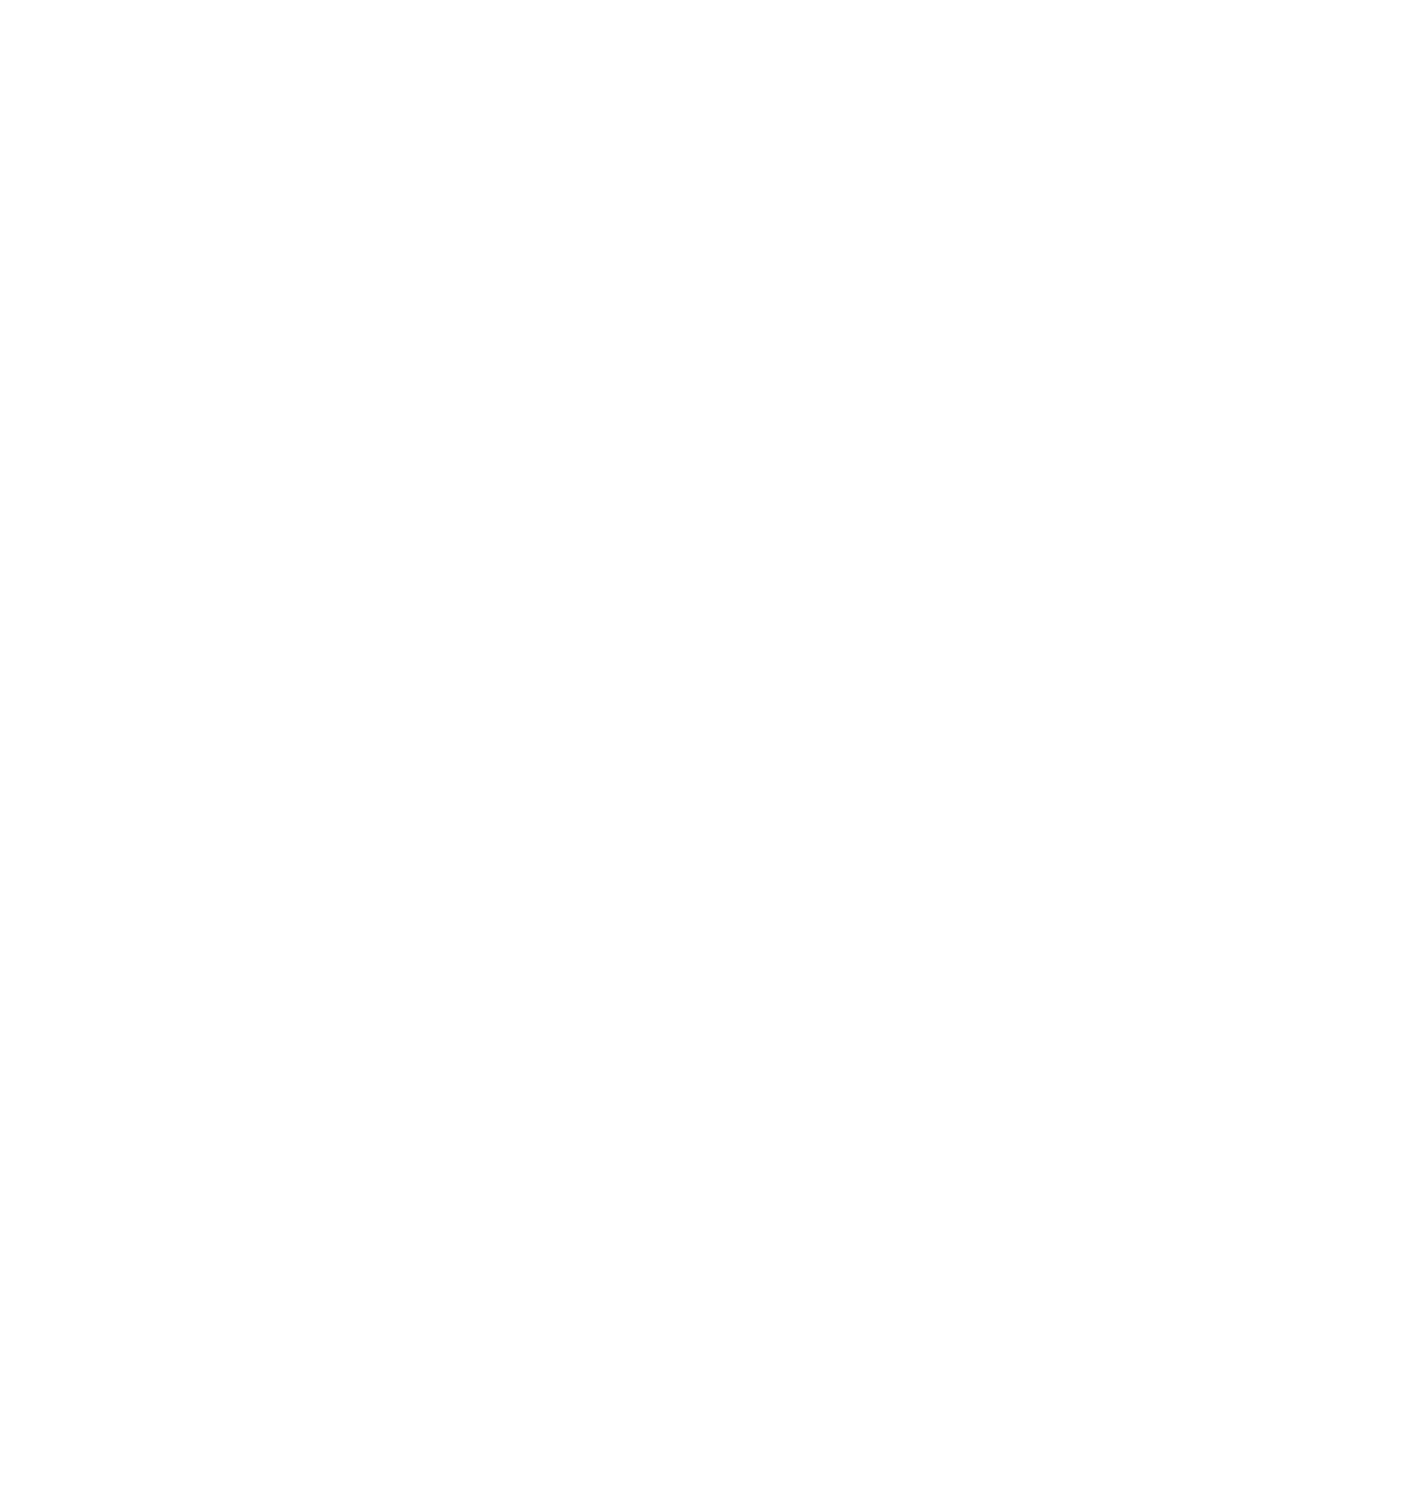 Hang Lung Properties logo pour fonds sombres (PNG transparent)